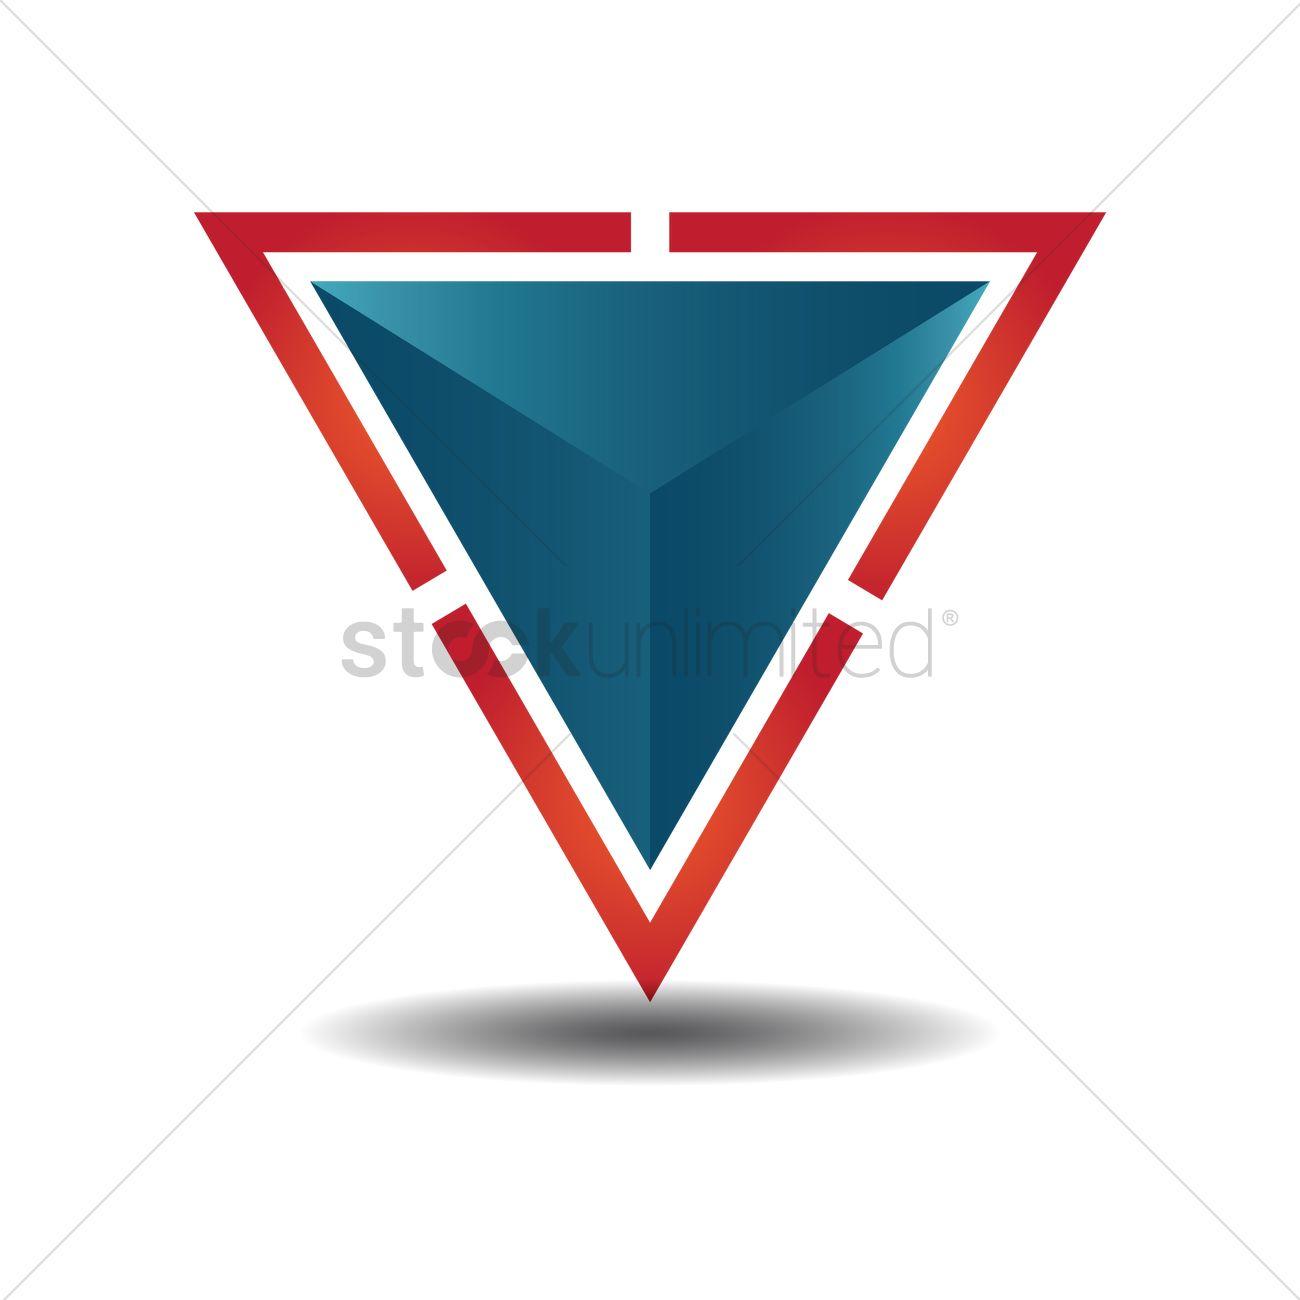 Trianle Logo - Triangle logo element Vector Image